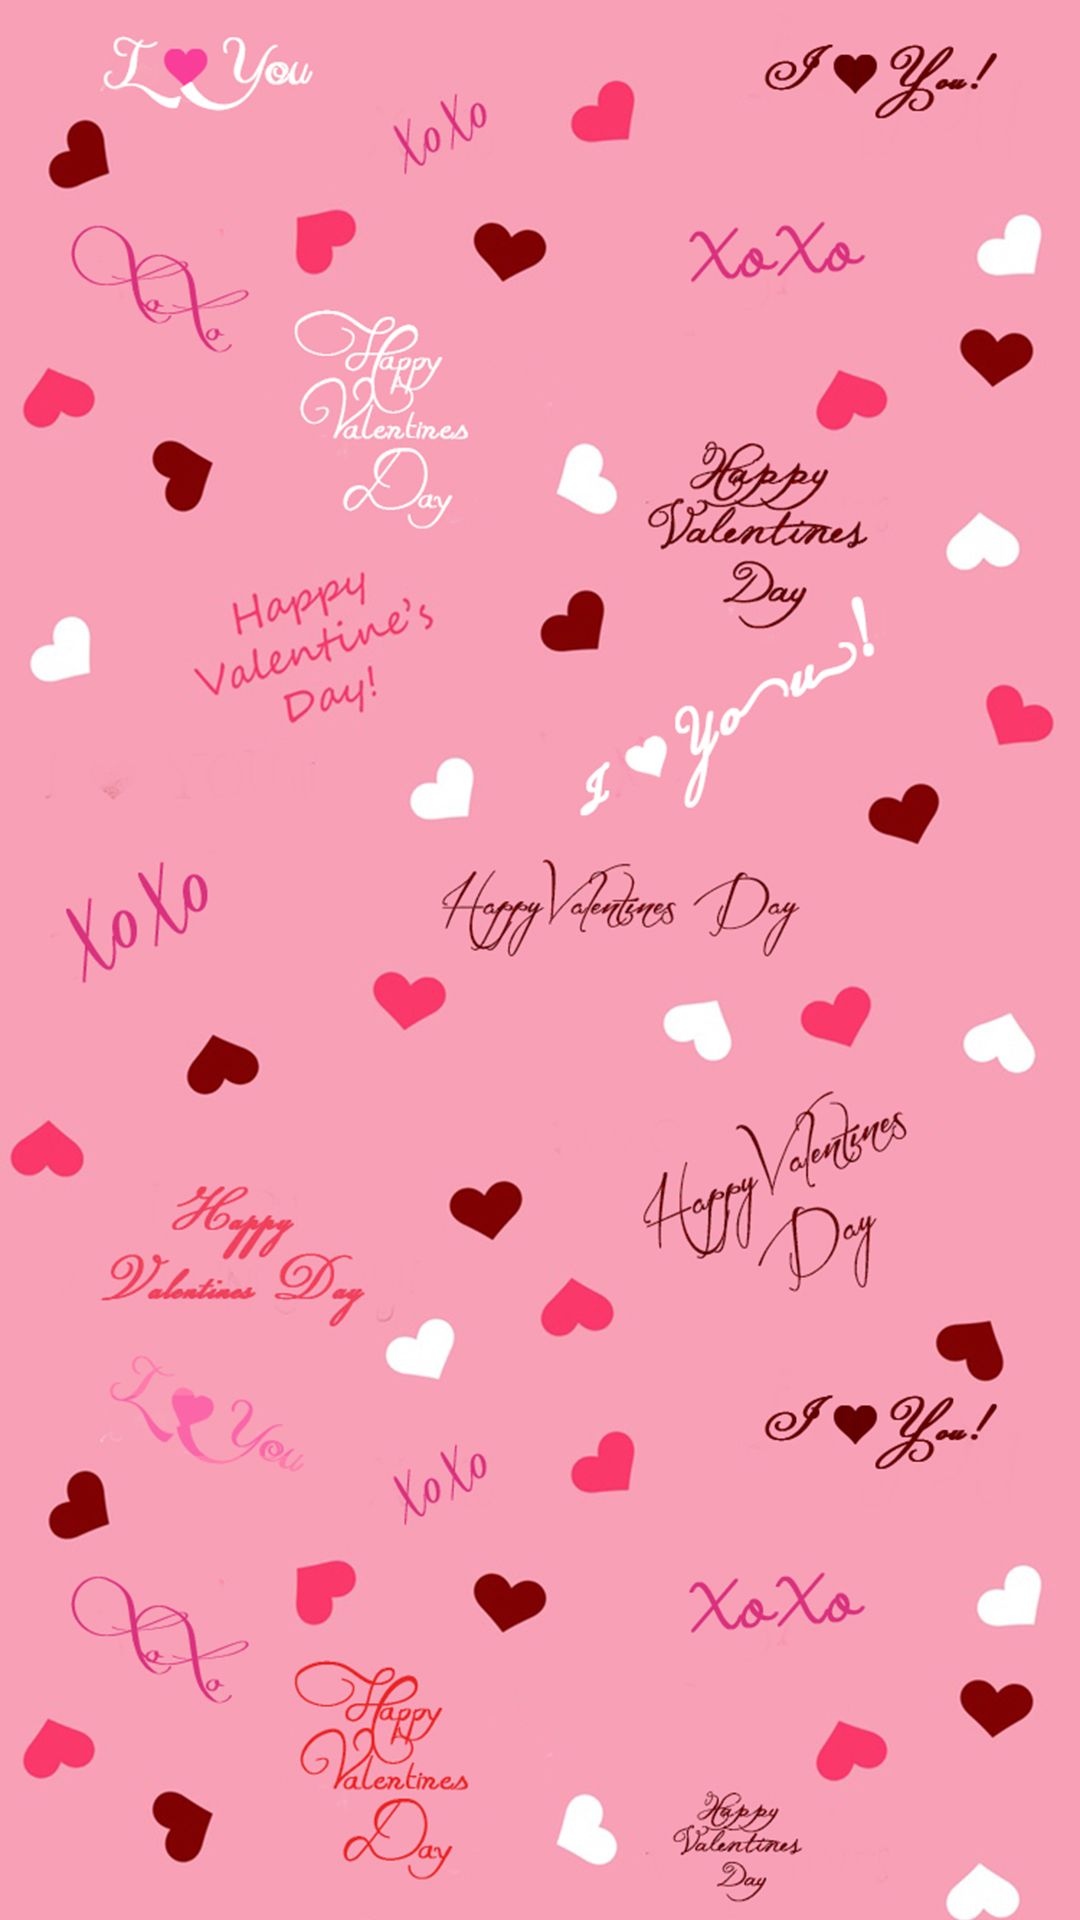 12+] Pretty Valentine Wallpaper on WallpaperSafari